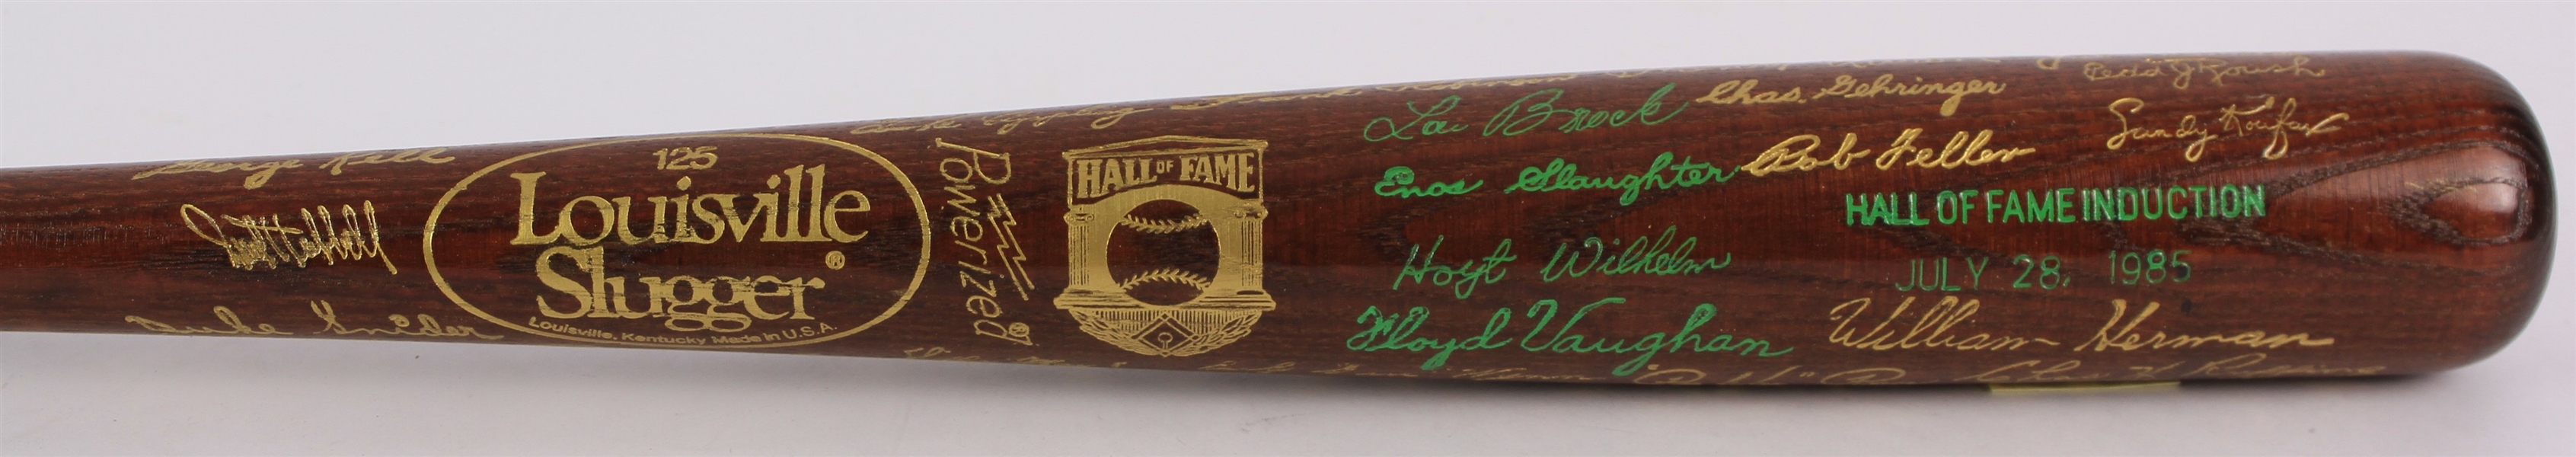 1985 Louisville Slugger Hall of Fame Induction Commemorative Bat (MEARS LOA)